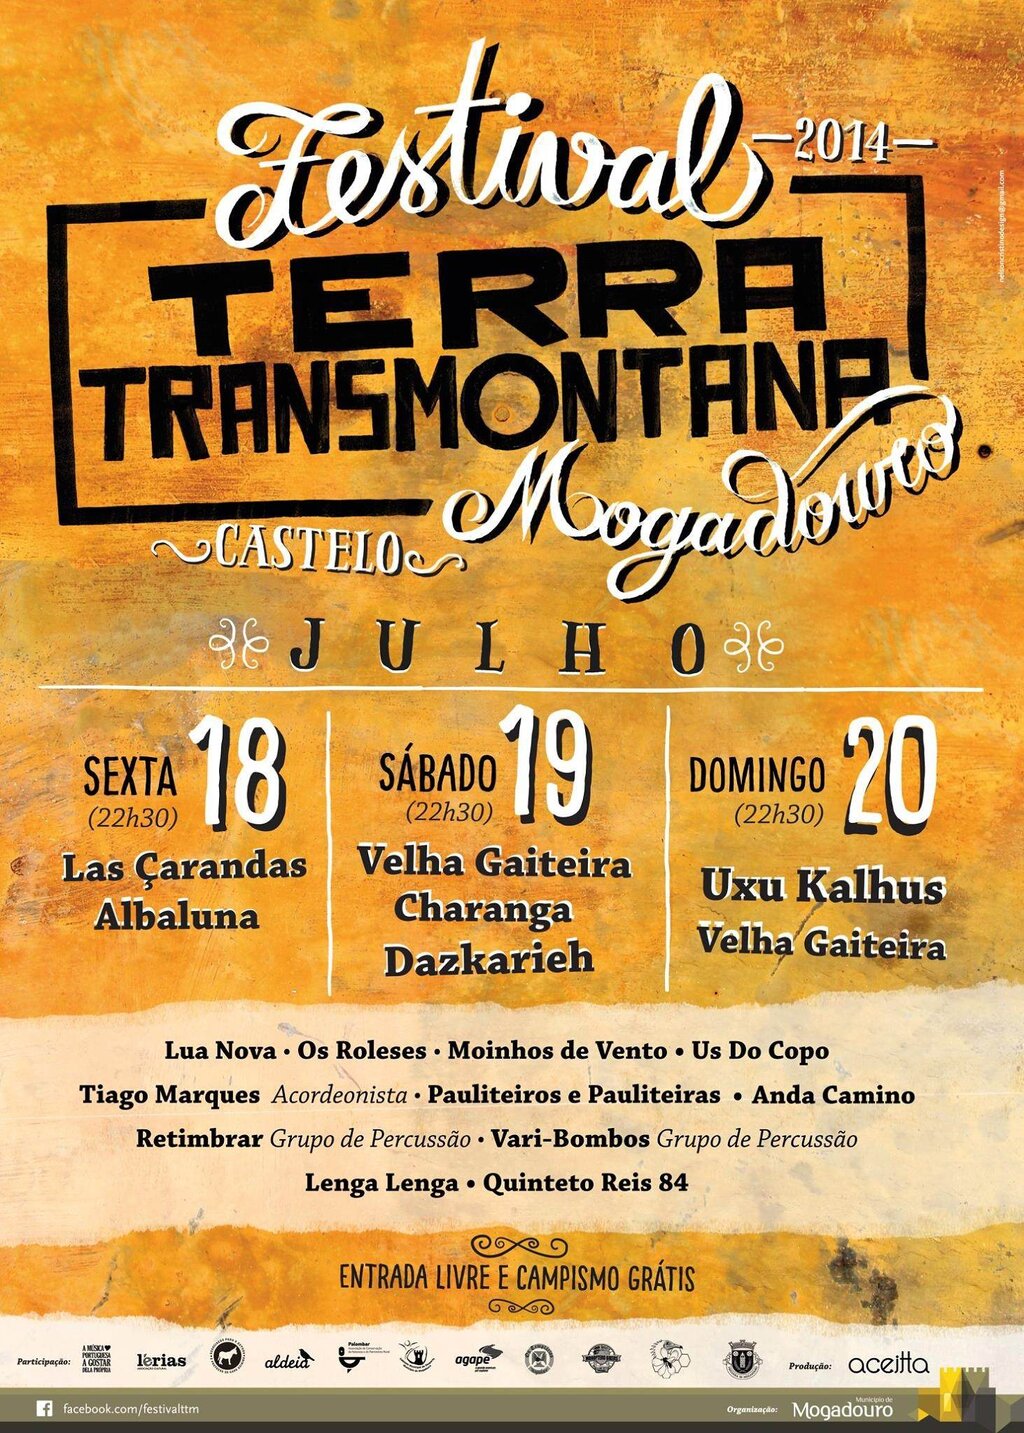 Festival Terra Transmontana - Castelo de Mogadouro